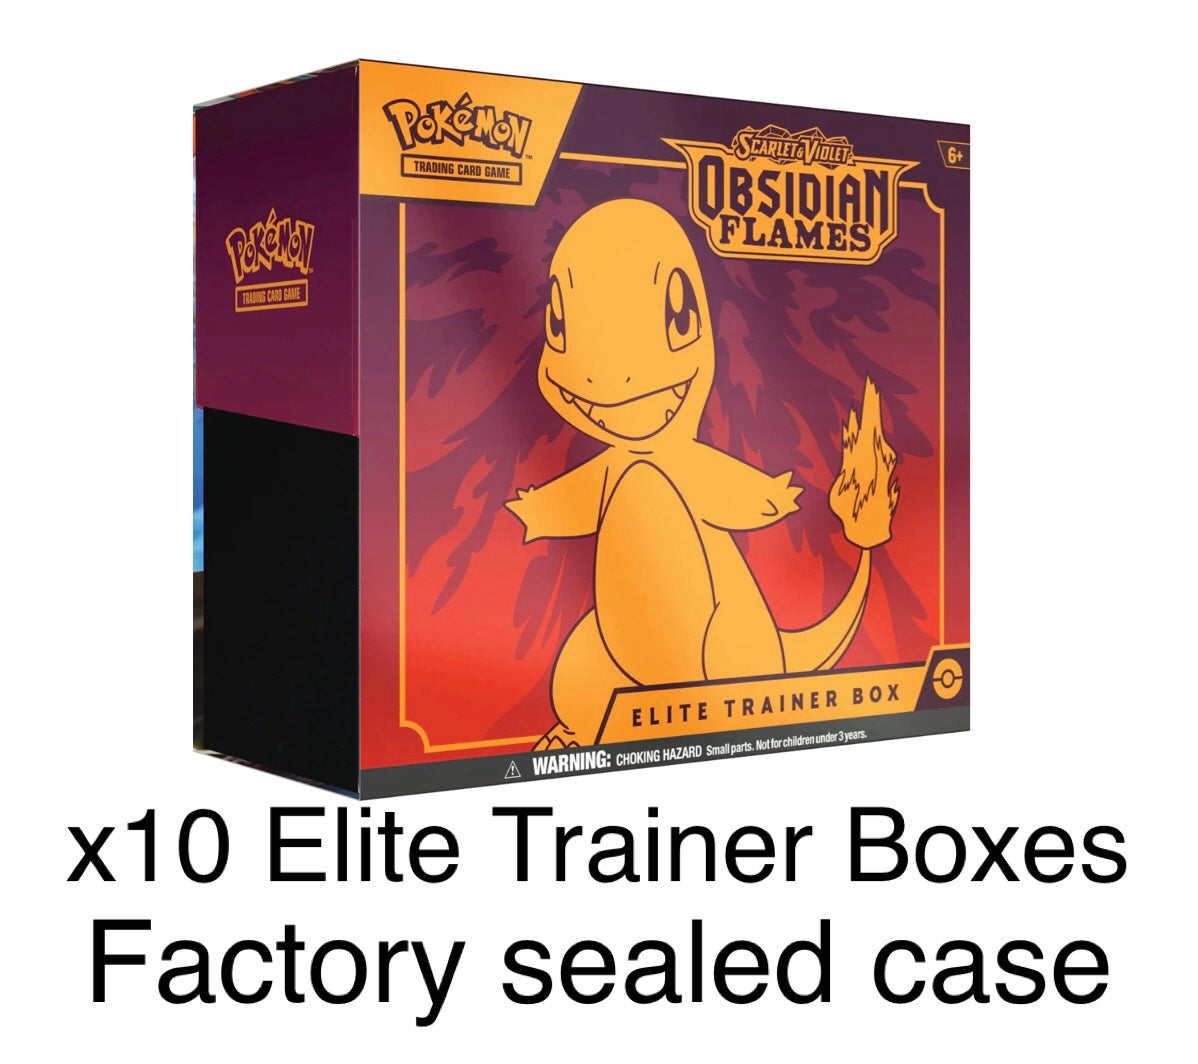 Pokemon Obsidian Flames Elite Trainer Box Sealed Case